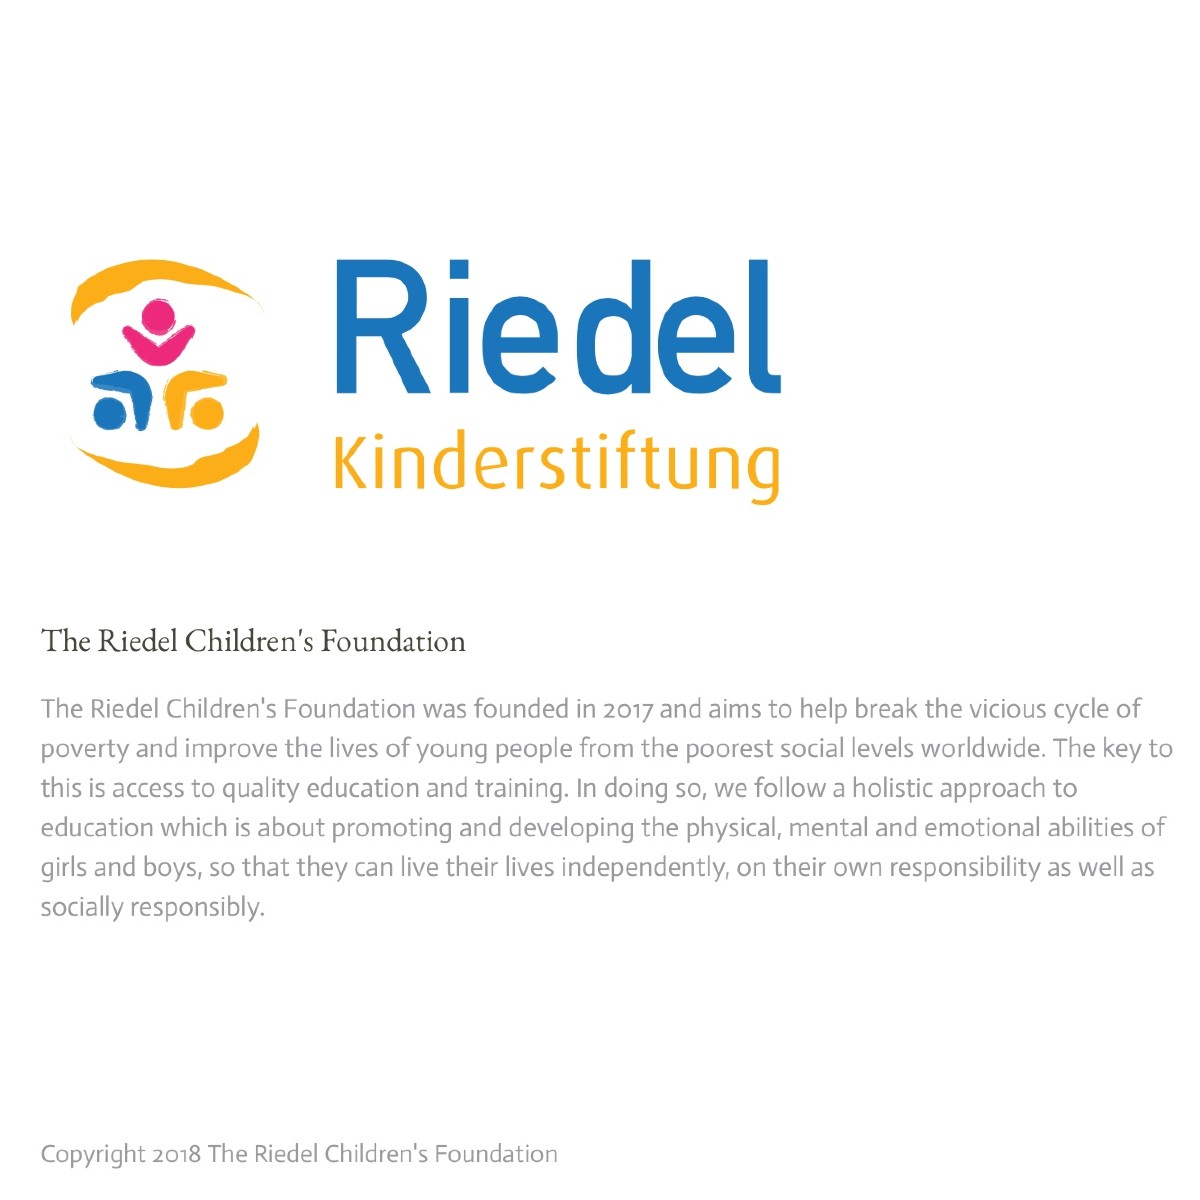 http://www.riedel-kinderstiftung.com